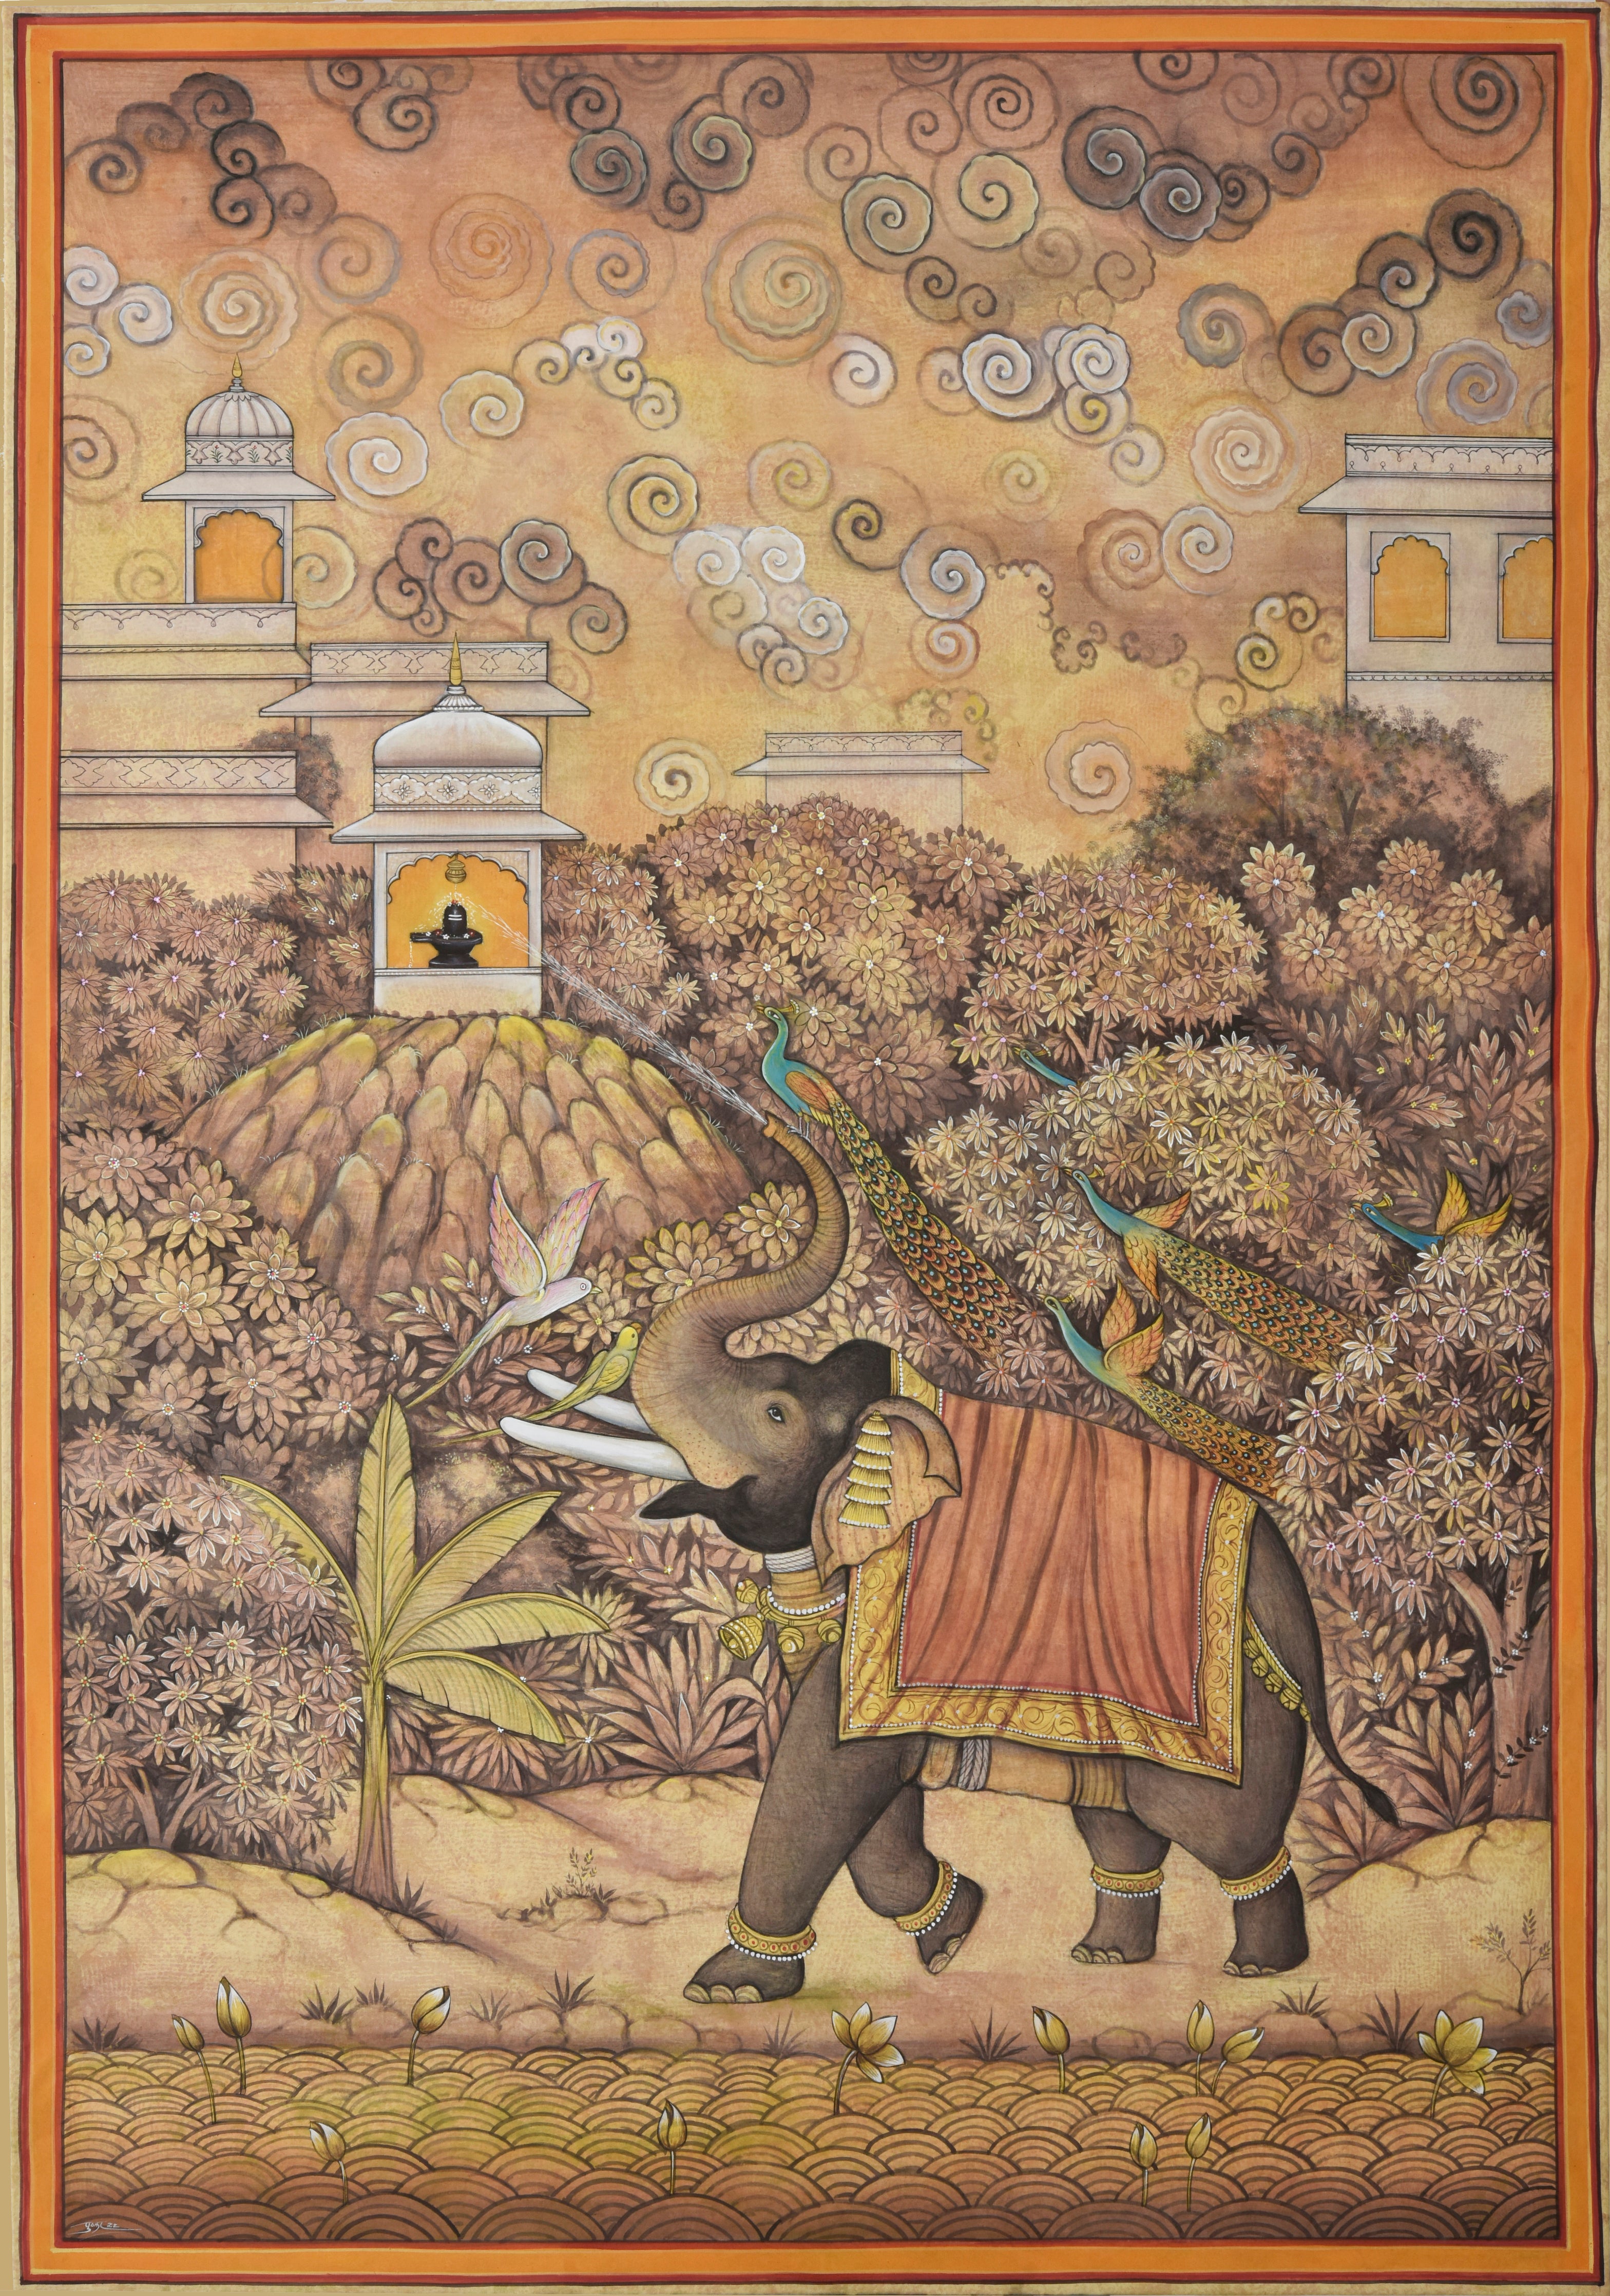 Pichwai Painting | Elephants, Peacocks and Shiva Lingam | Indian Art